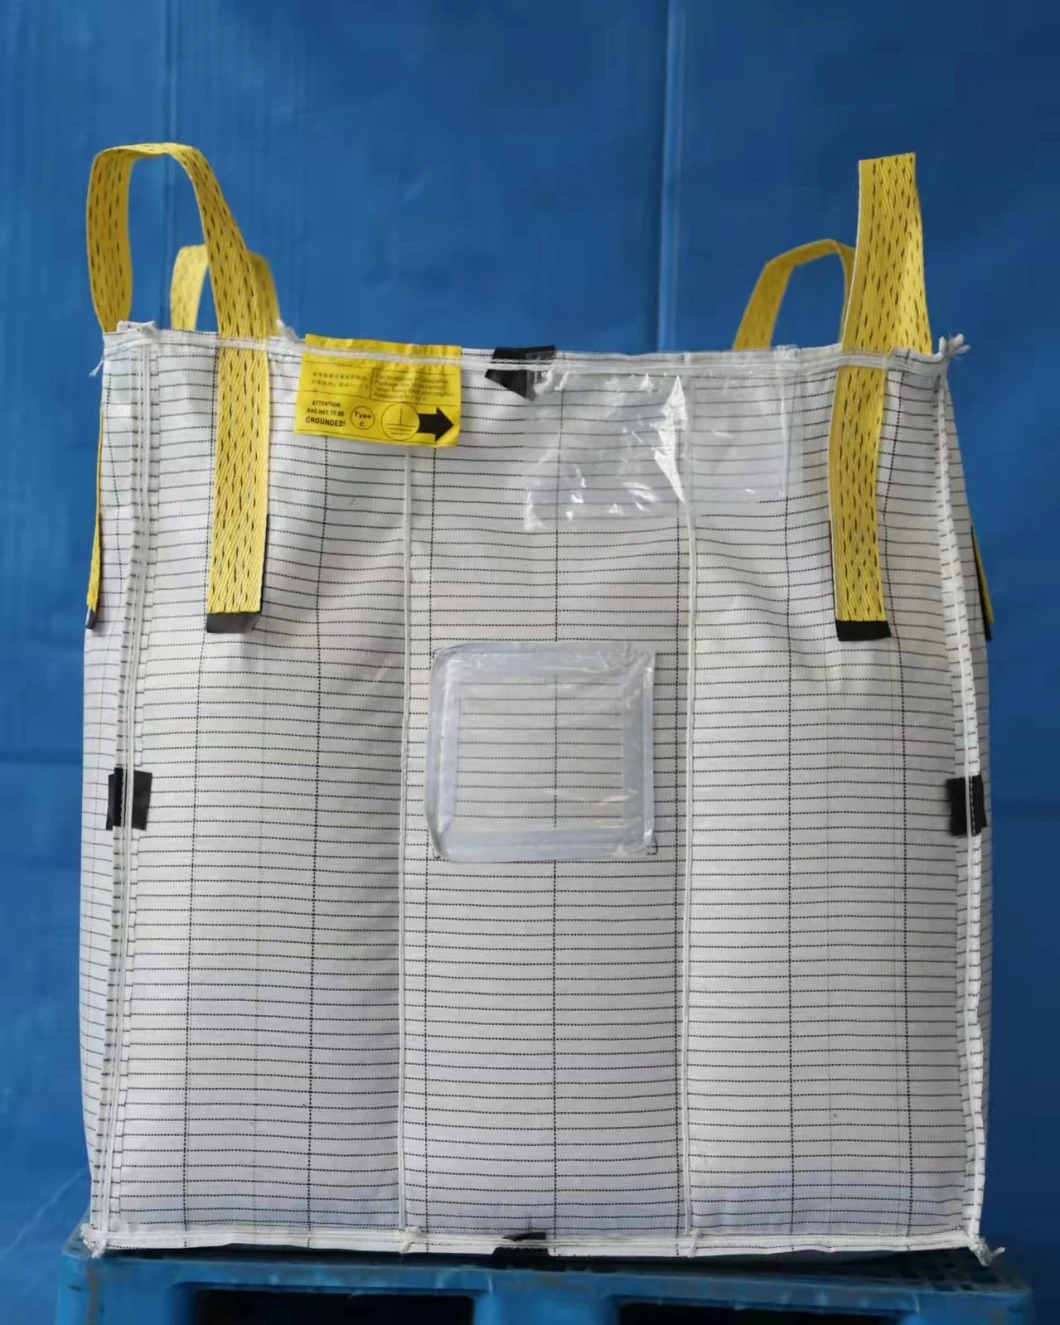 Conductive Type C Bulk Bag Ton Bag 1000kg for Safe Transit in Sensitive Environment FIBC